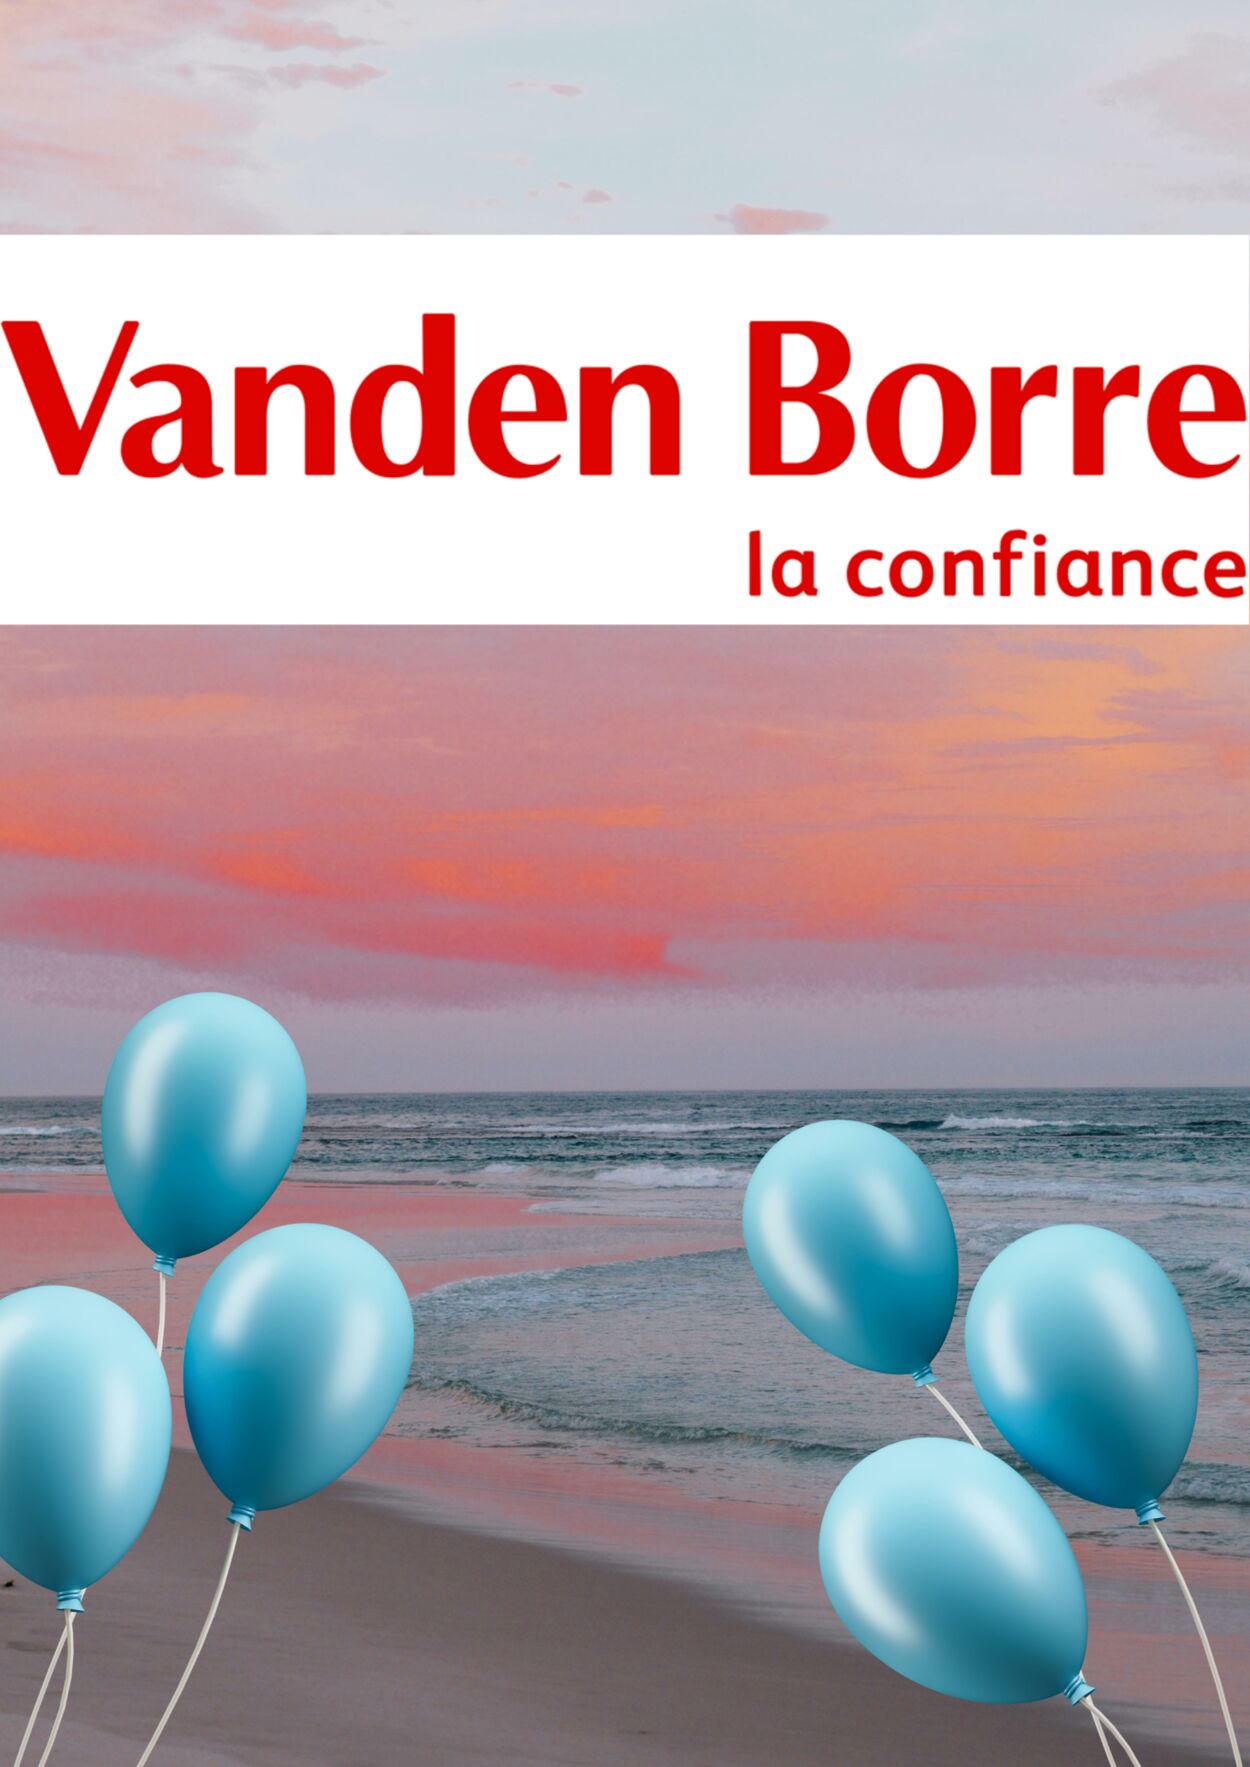 Folder Vanden Borre 03.02.2023 - 16.02.2023